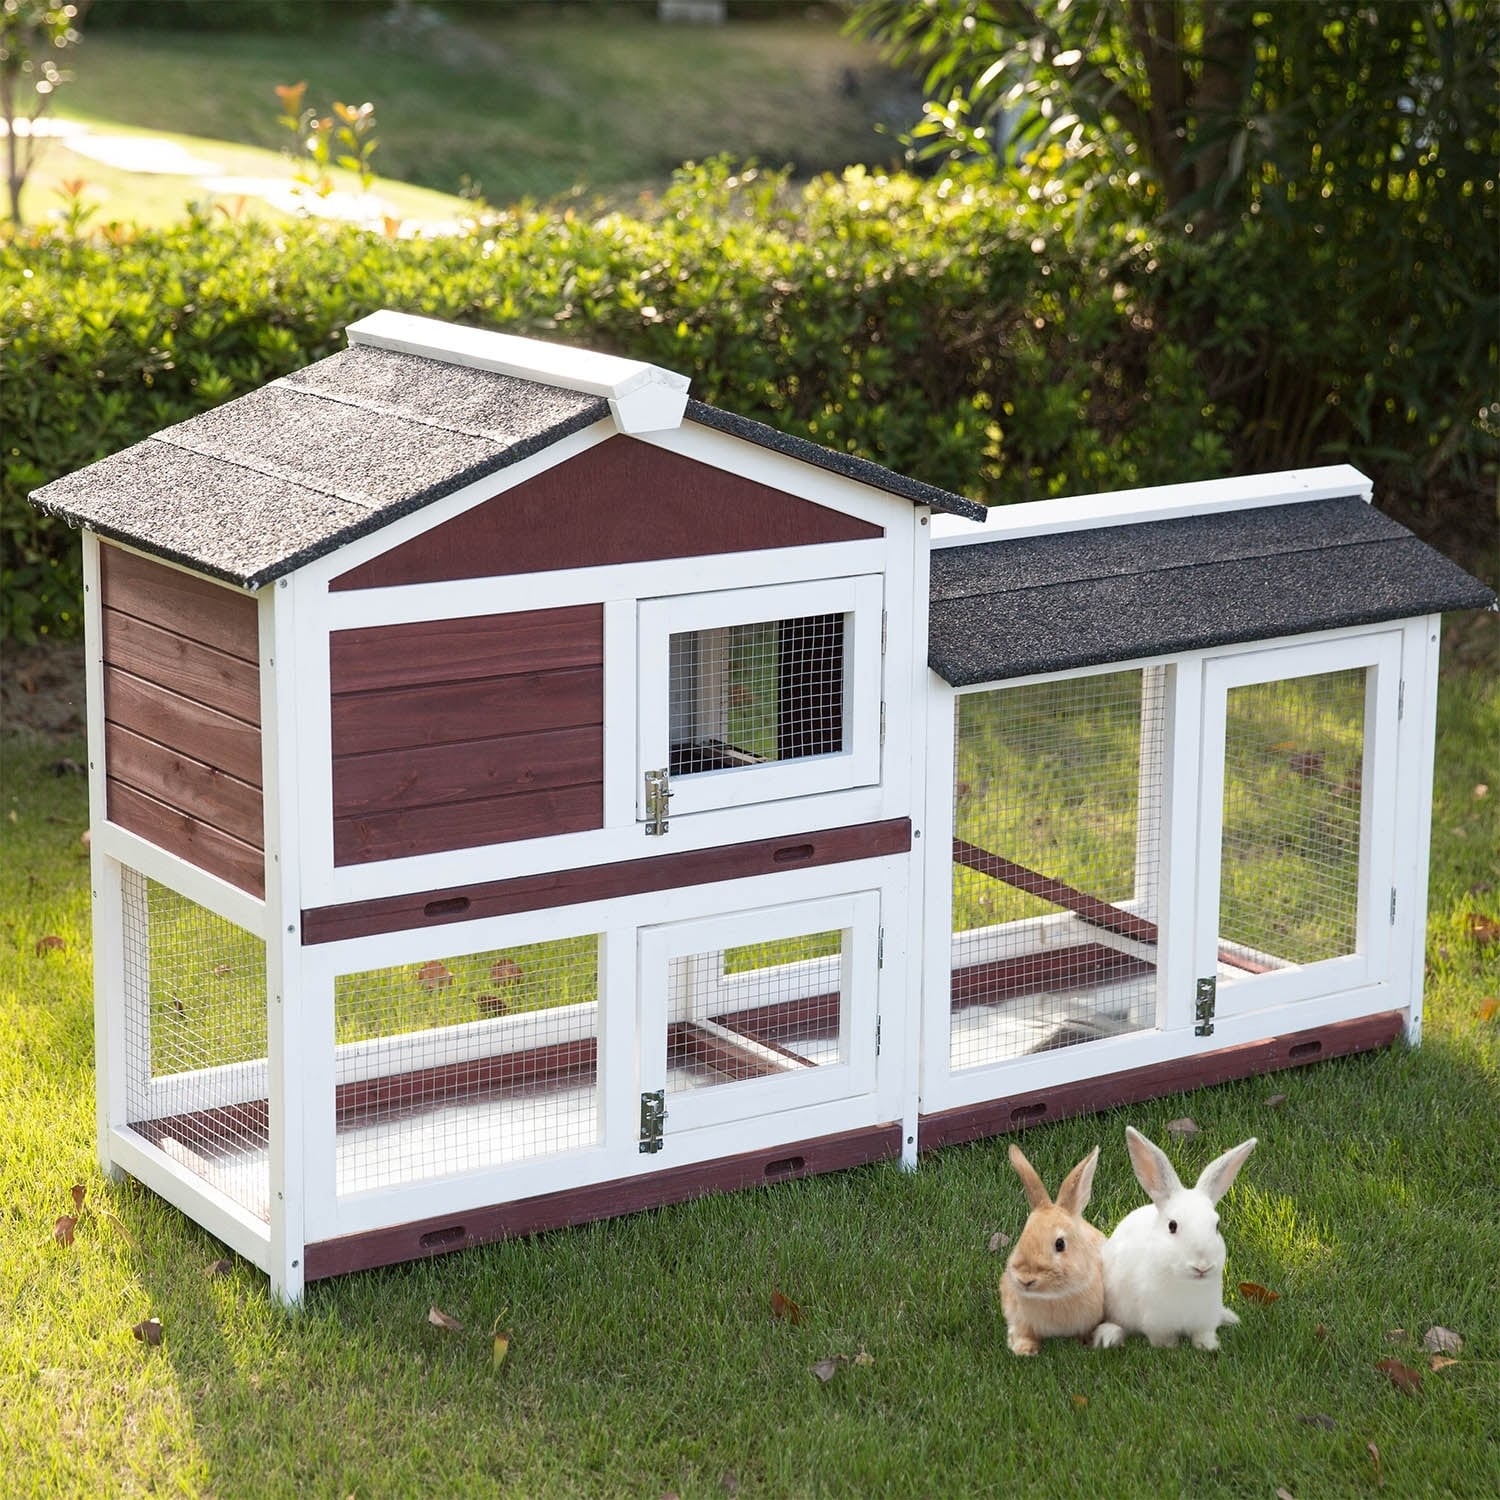 rabbit house